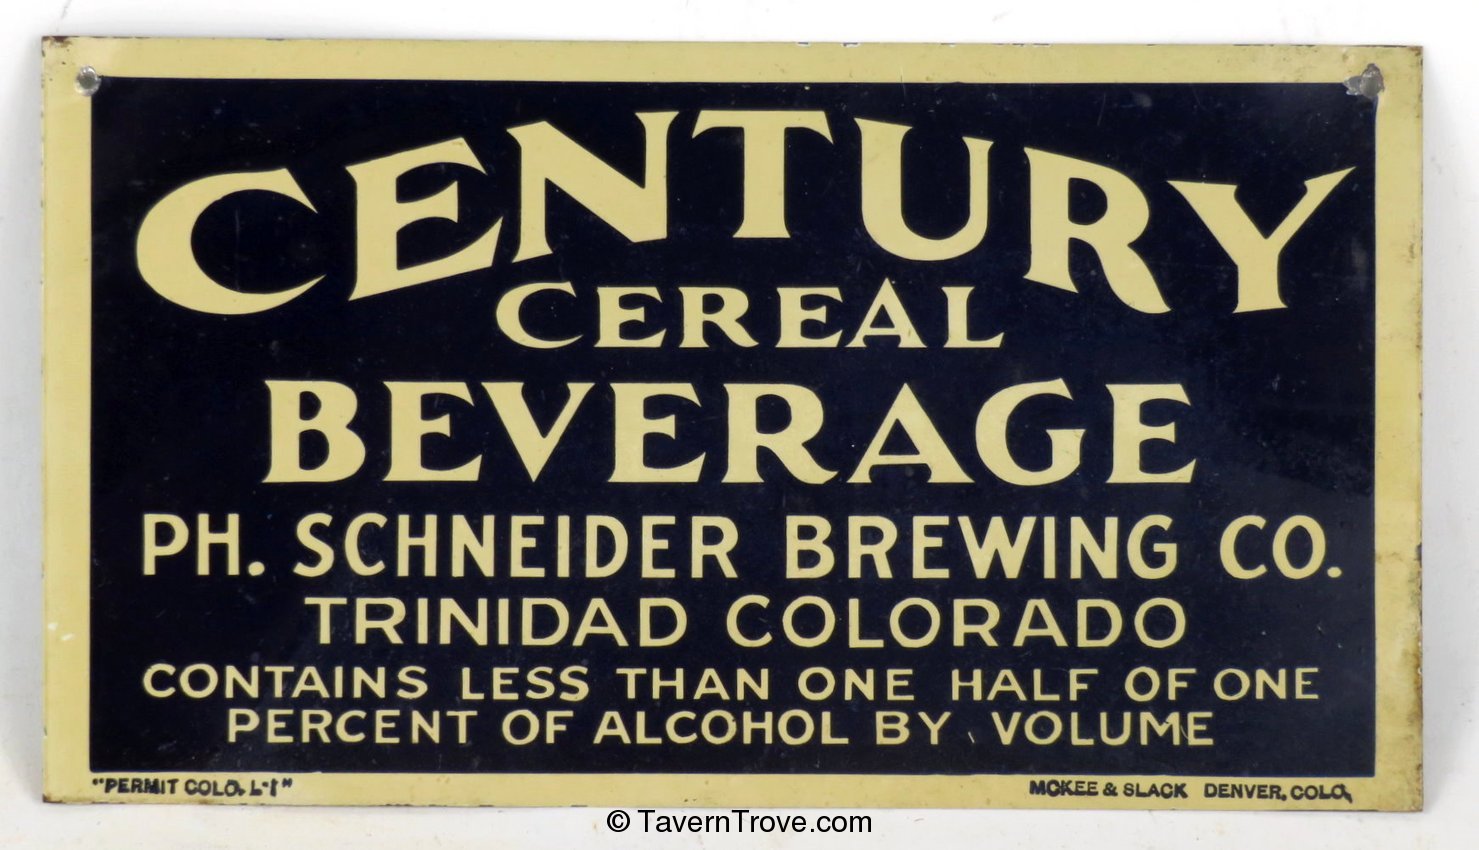 Century Cereal Beverage